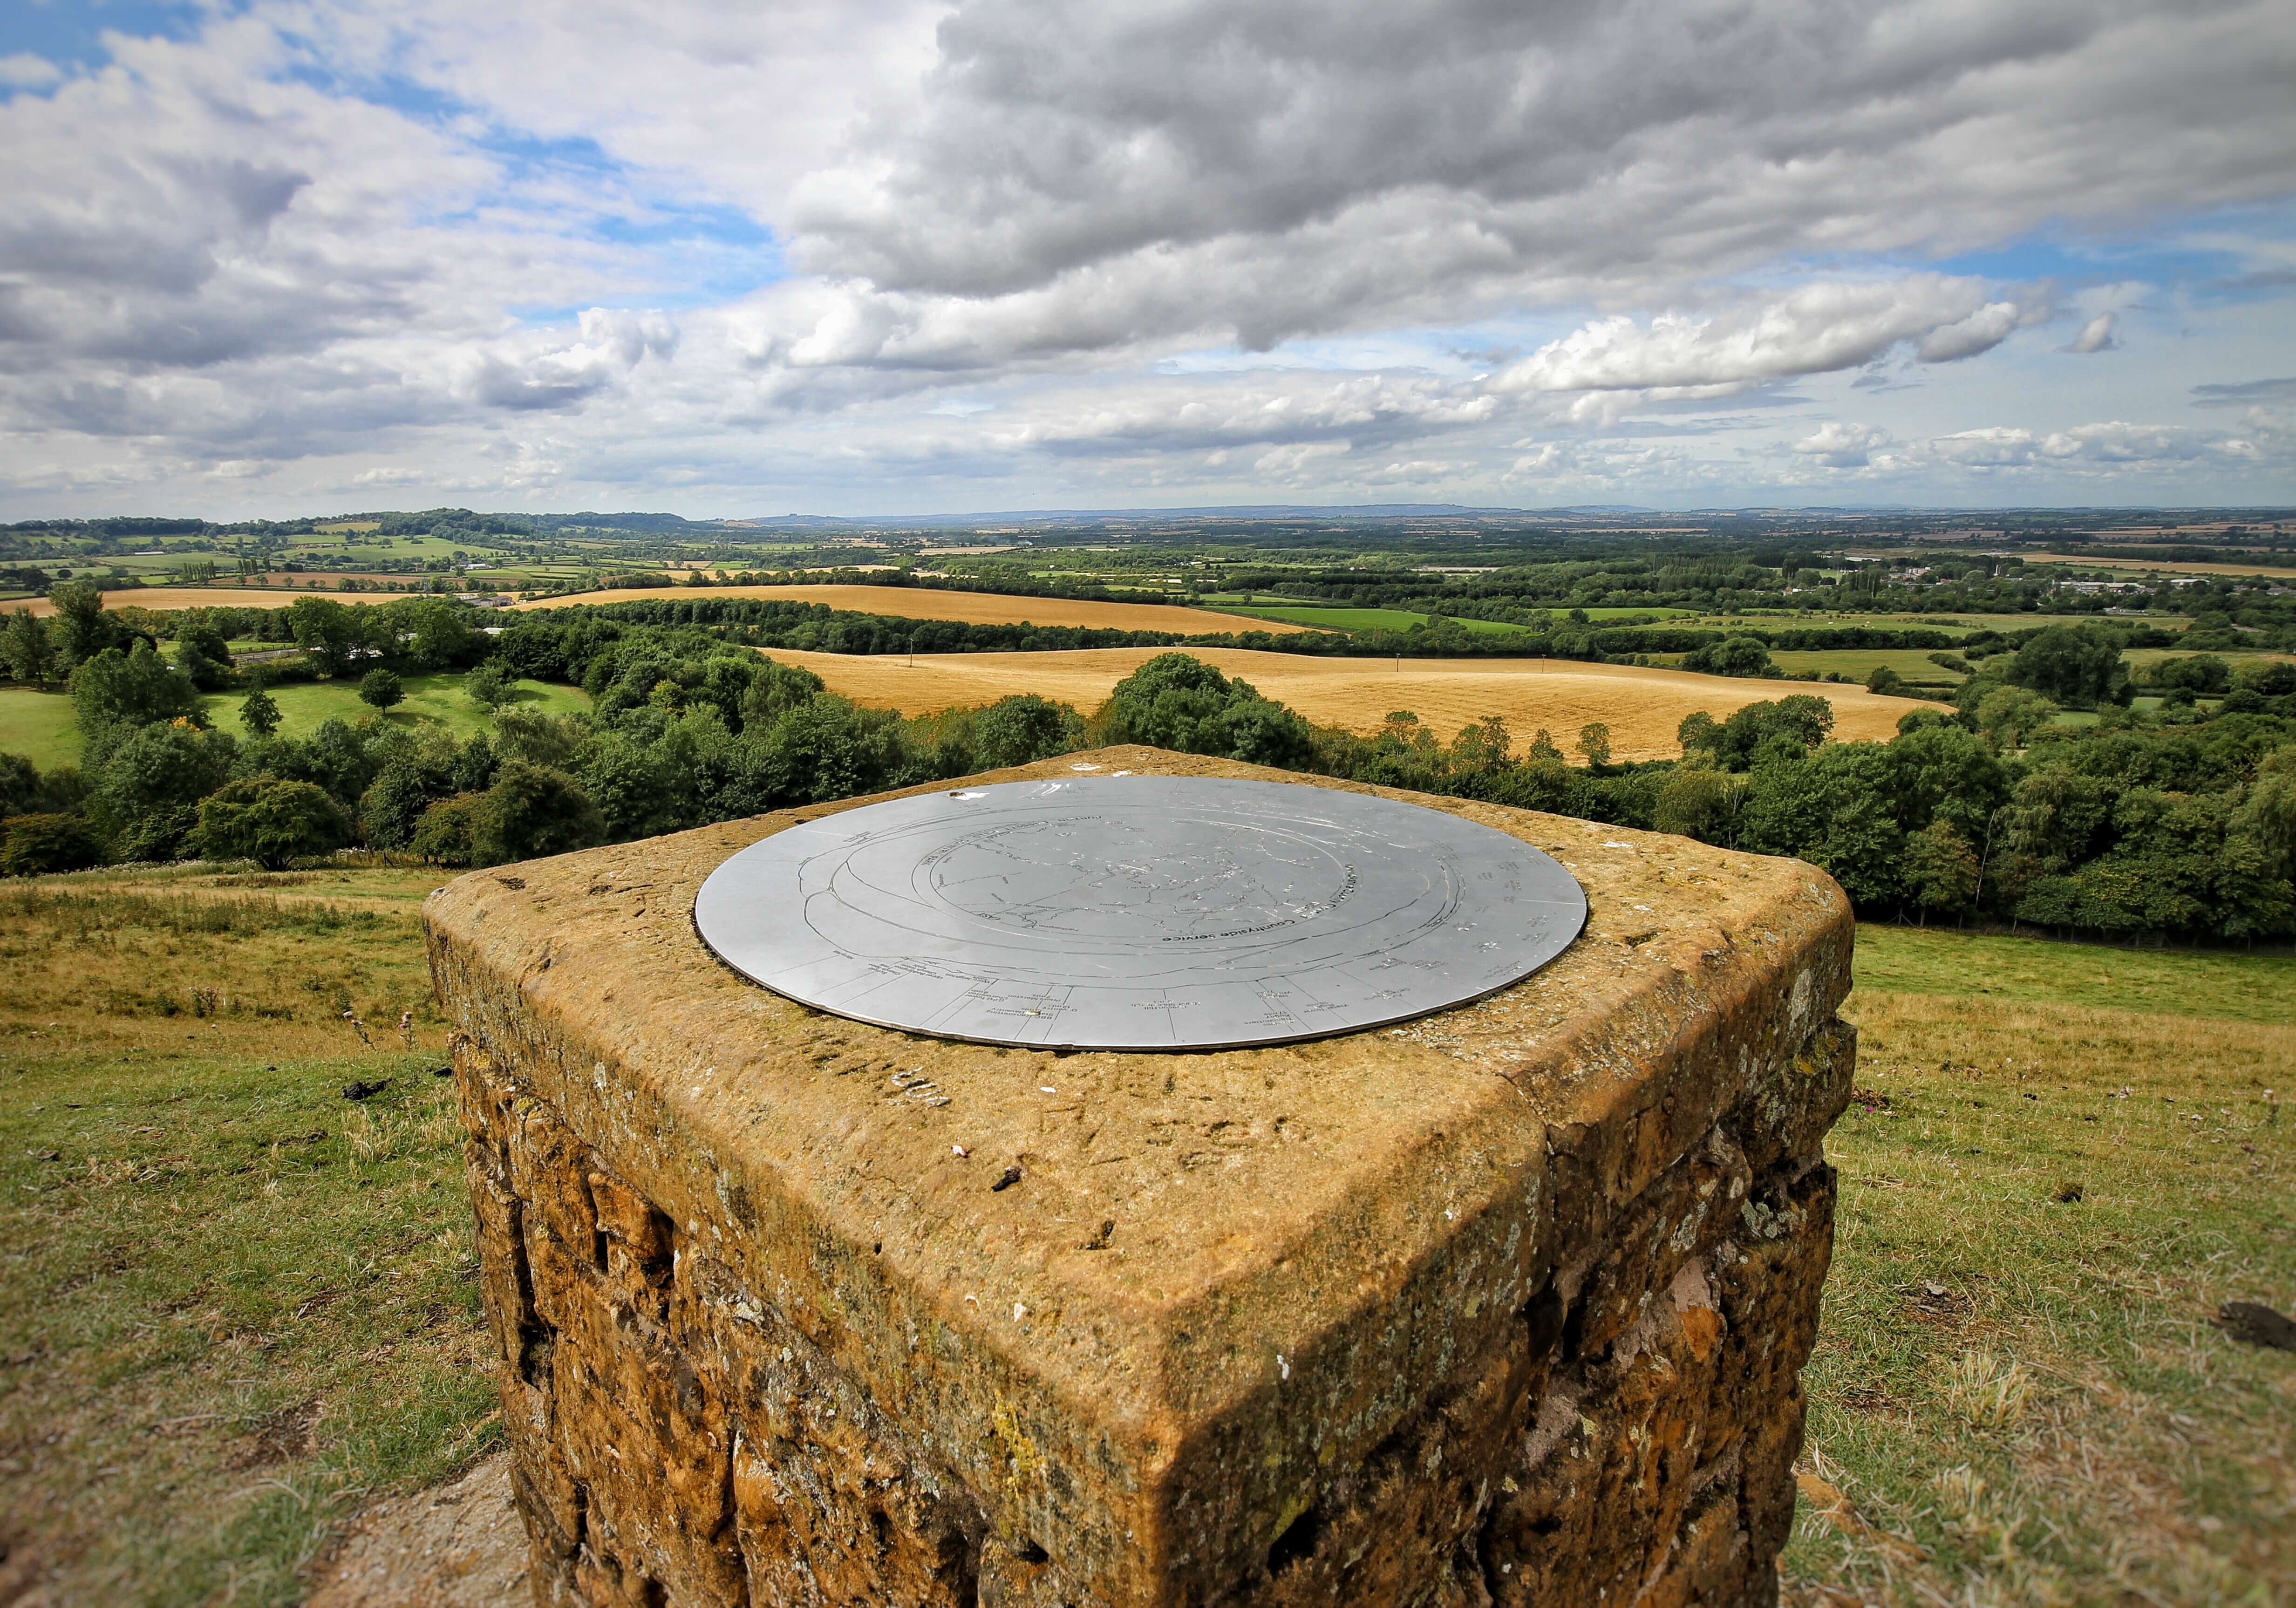 The view across Warwickshire